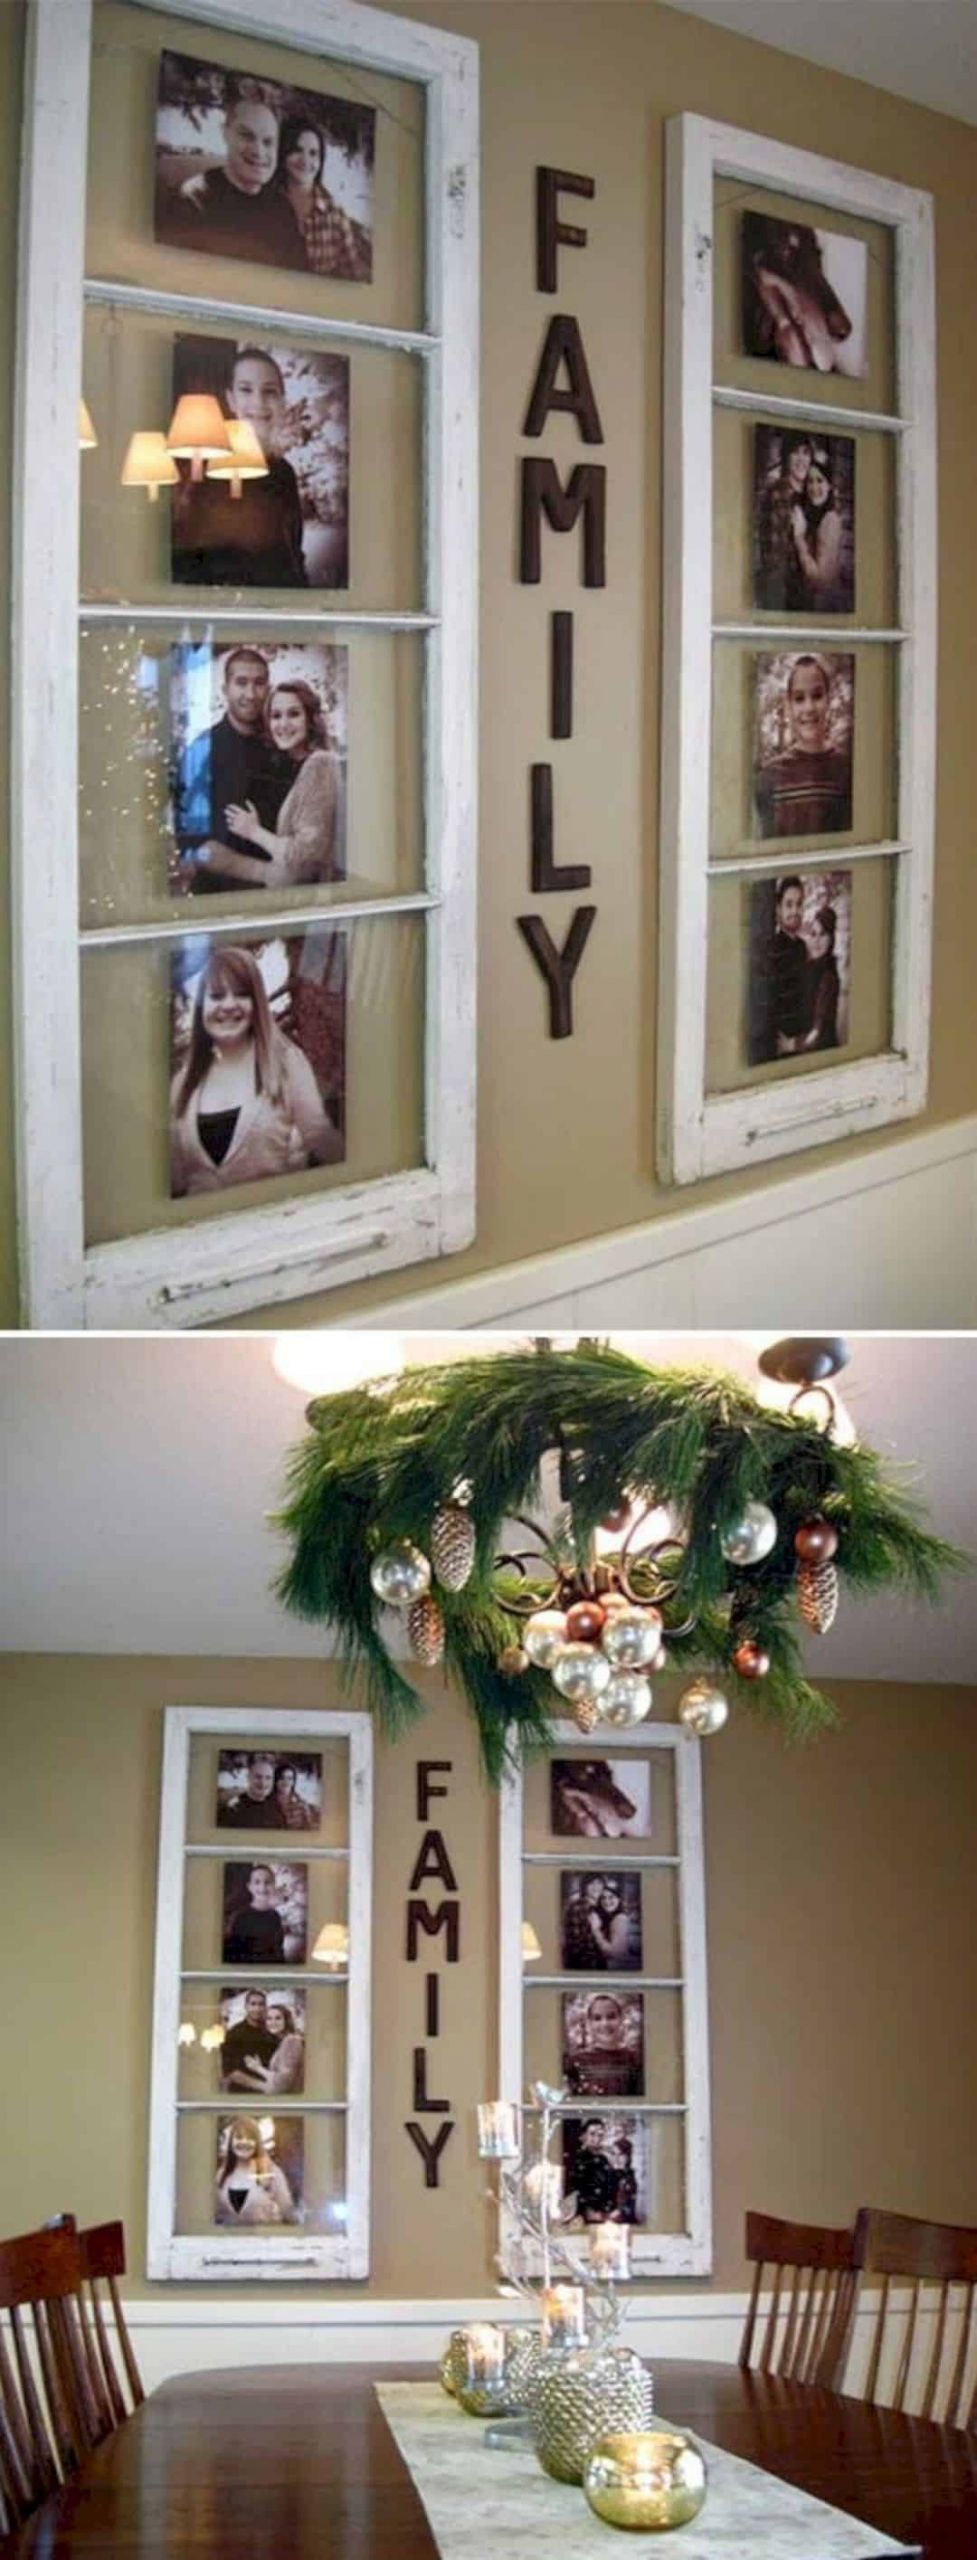 DIY Decorating Picture Frames
 17 Cool DIY Home Decor Picture Frames